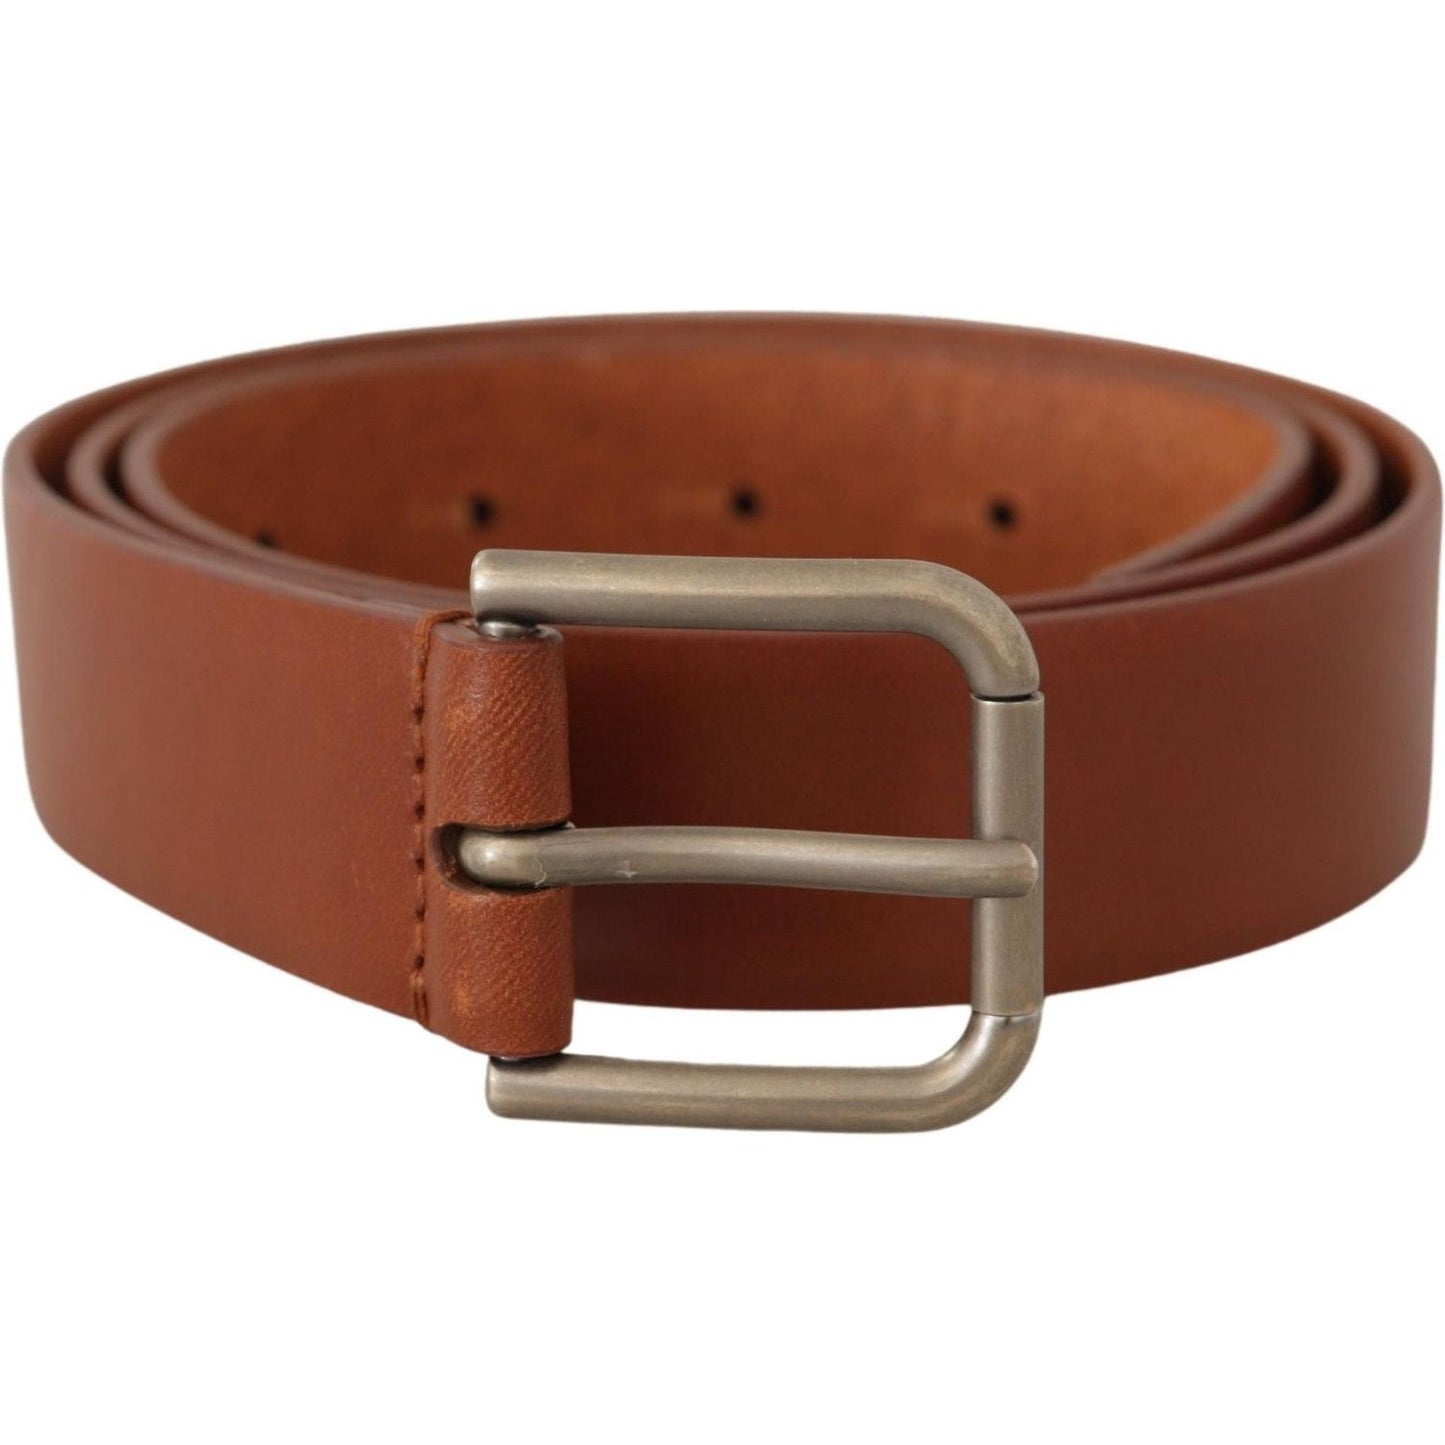 Elegant Leather Belt with Metal Buckle